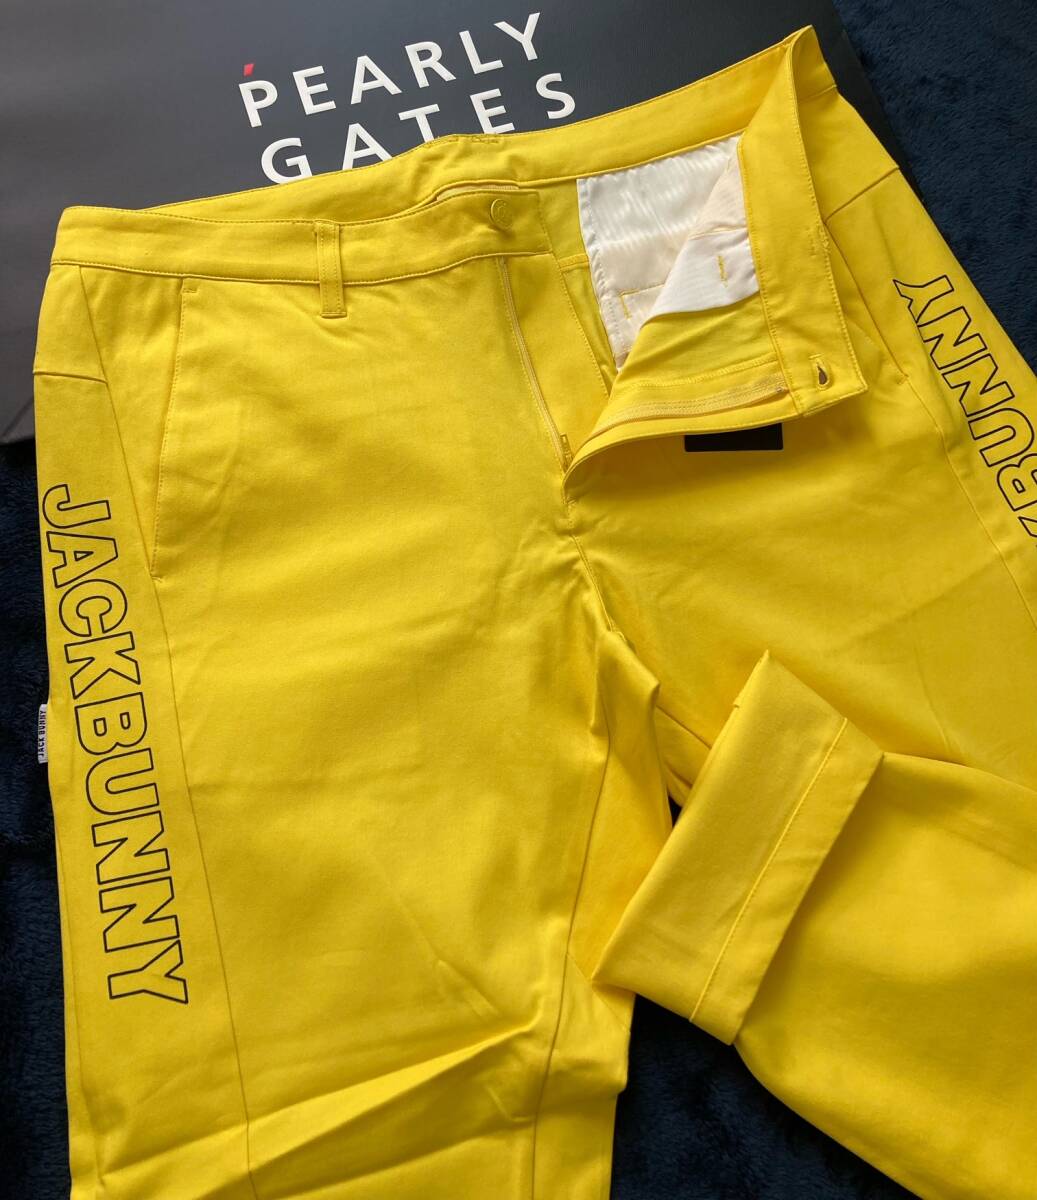  new goods Pearly Gates Jack ba knee cotton rayon tsu il stretch pants (4) size M/ yellow PEARLY GATES JACK BUNNY